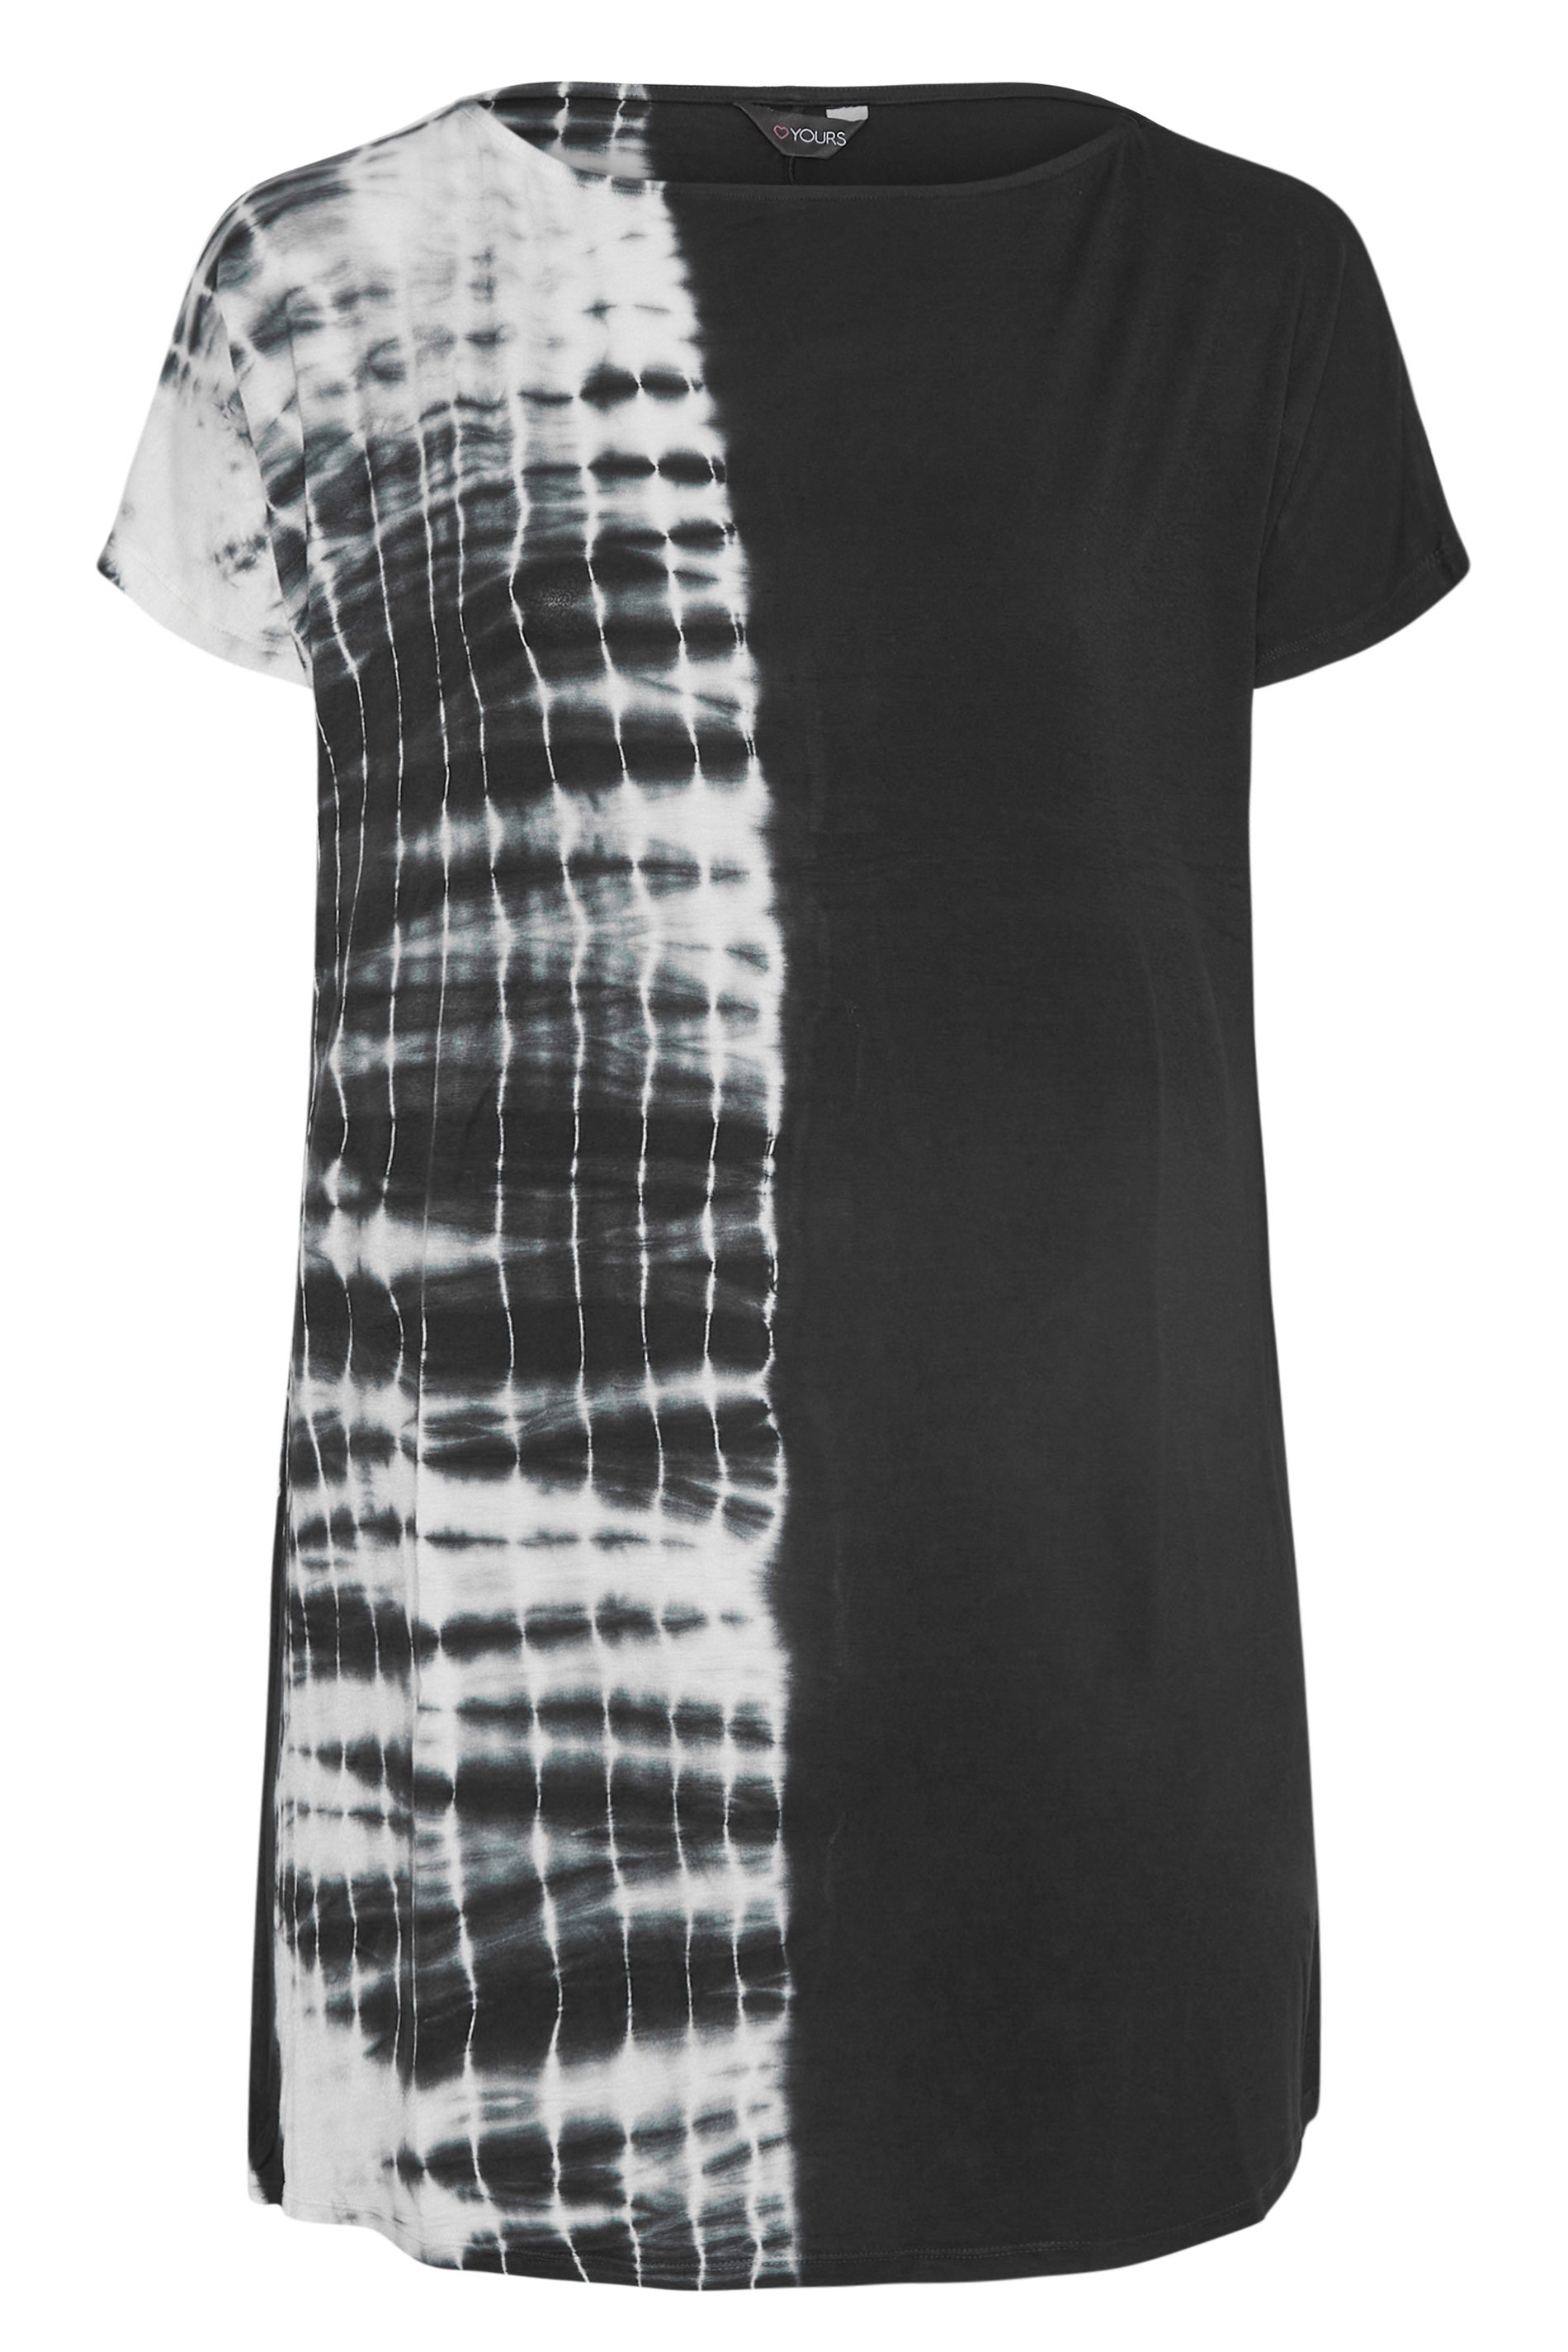 Grande taille  Tops Grande taille  T-Shirts | T-Shirt Noir Tie & Dye Manches Courtes - FW65847